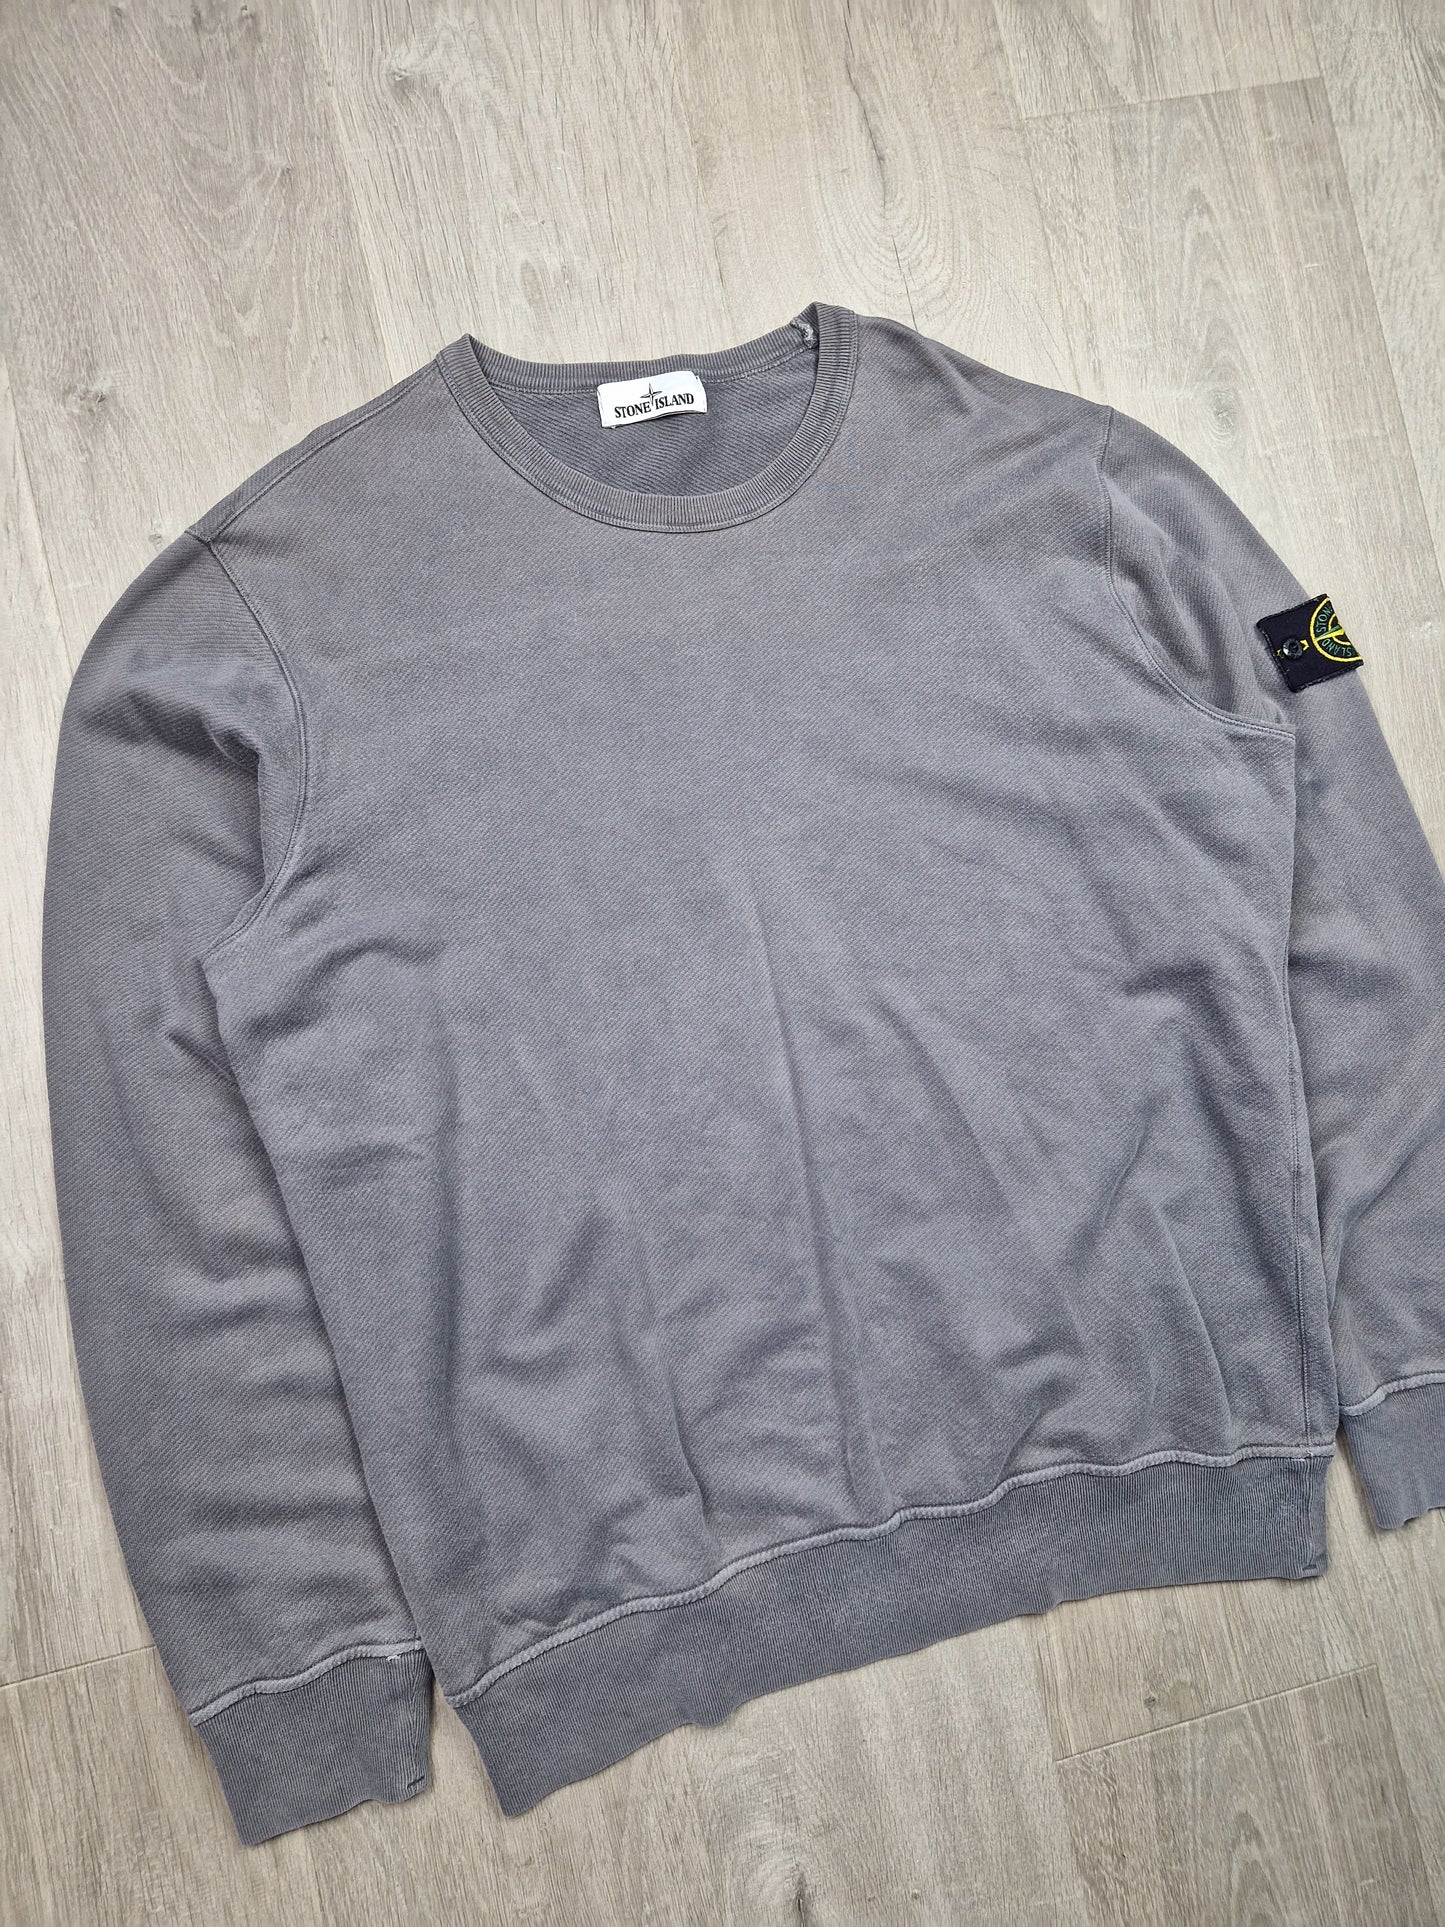 Stone Island sweatshirt (XL)